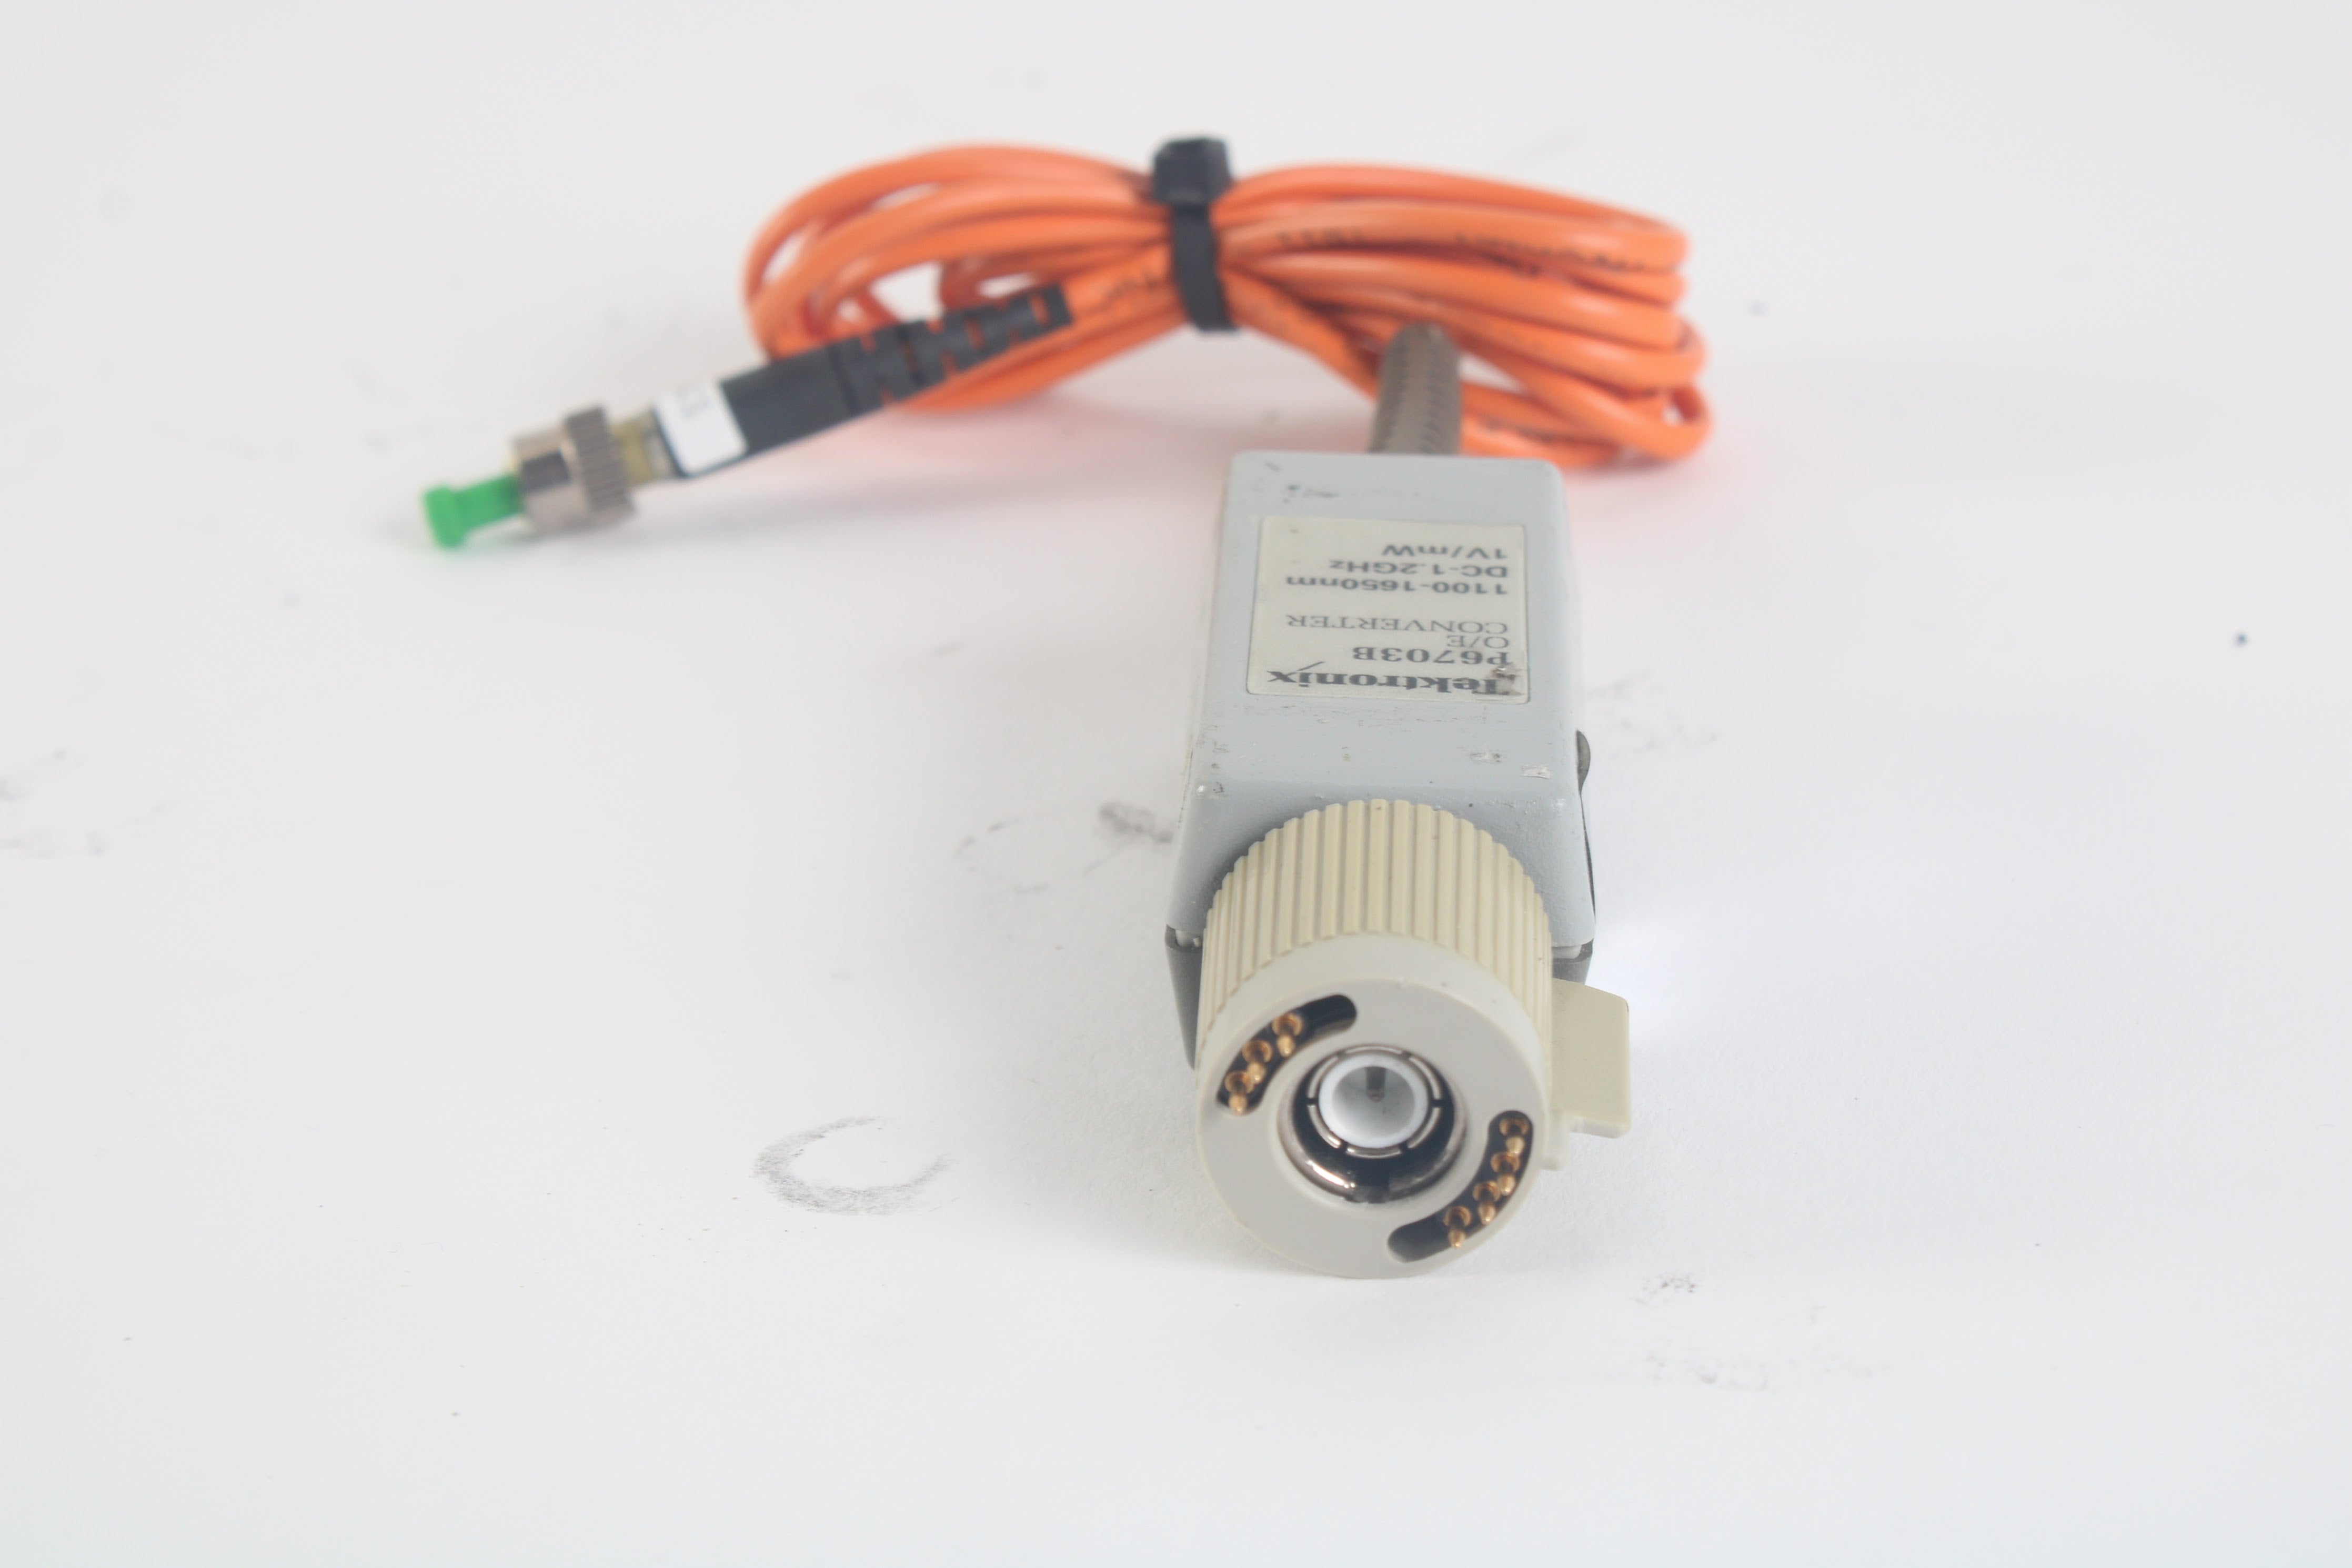 Tektronix P6703B O/E Converter 1.2 GHz 1100-1650nm Optical to Electrical